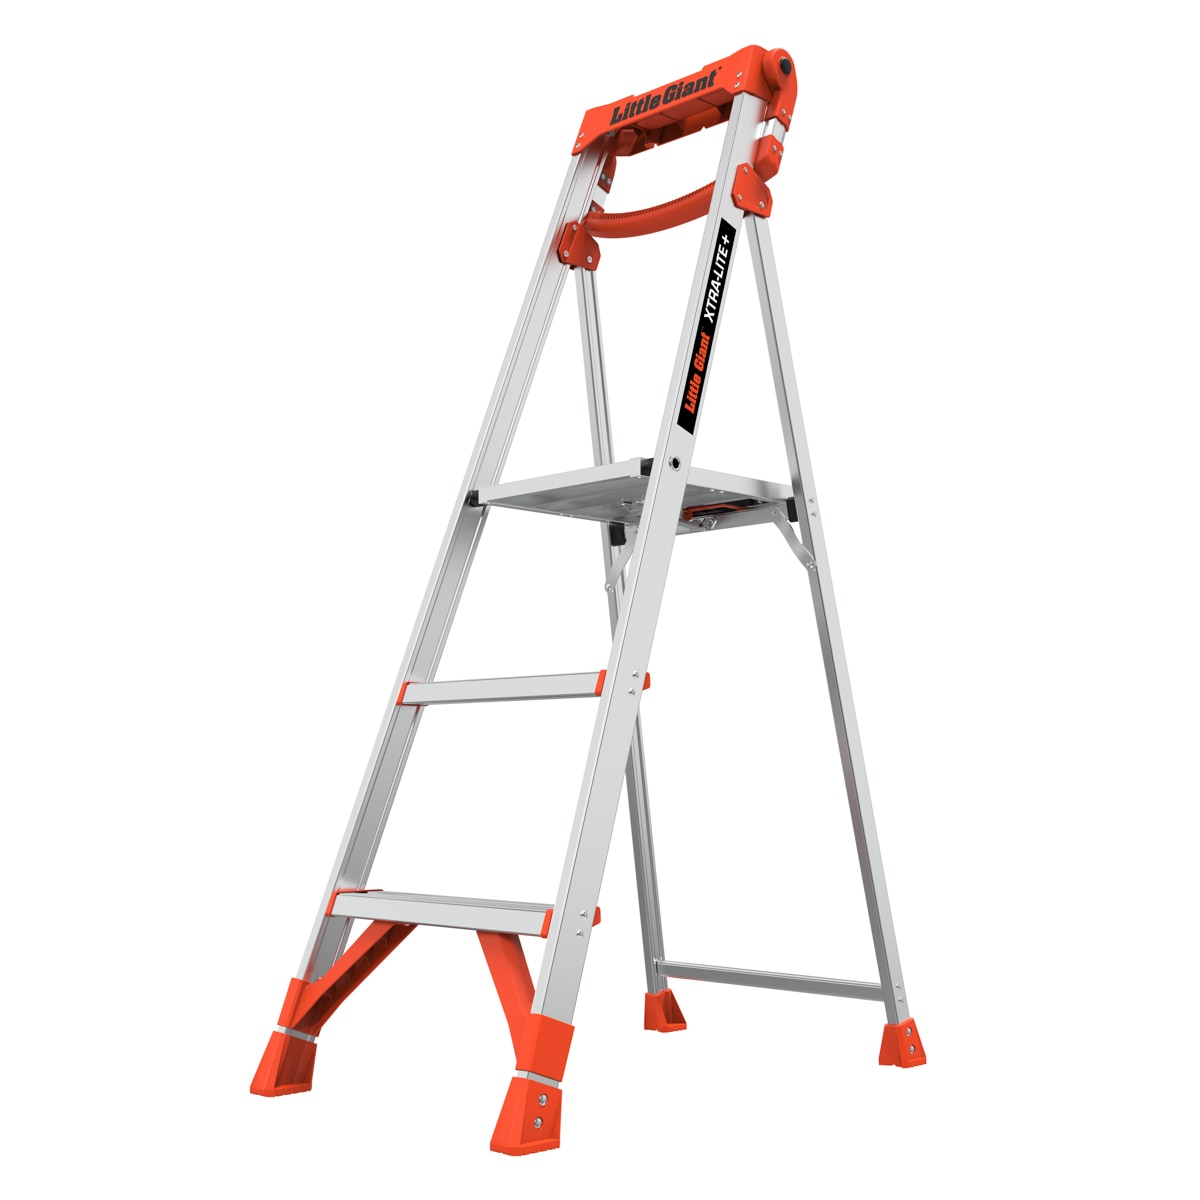 T7414, Step Ladders